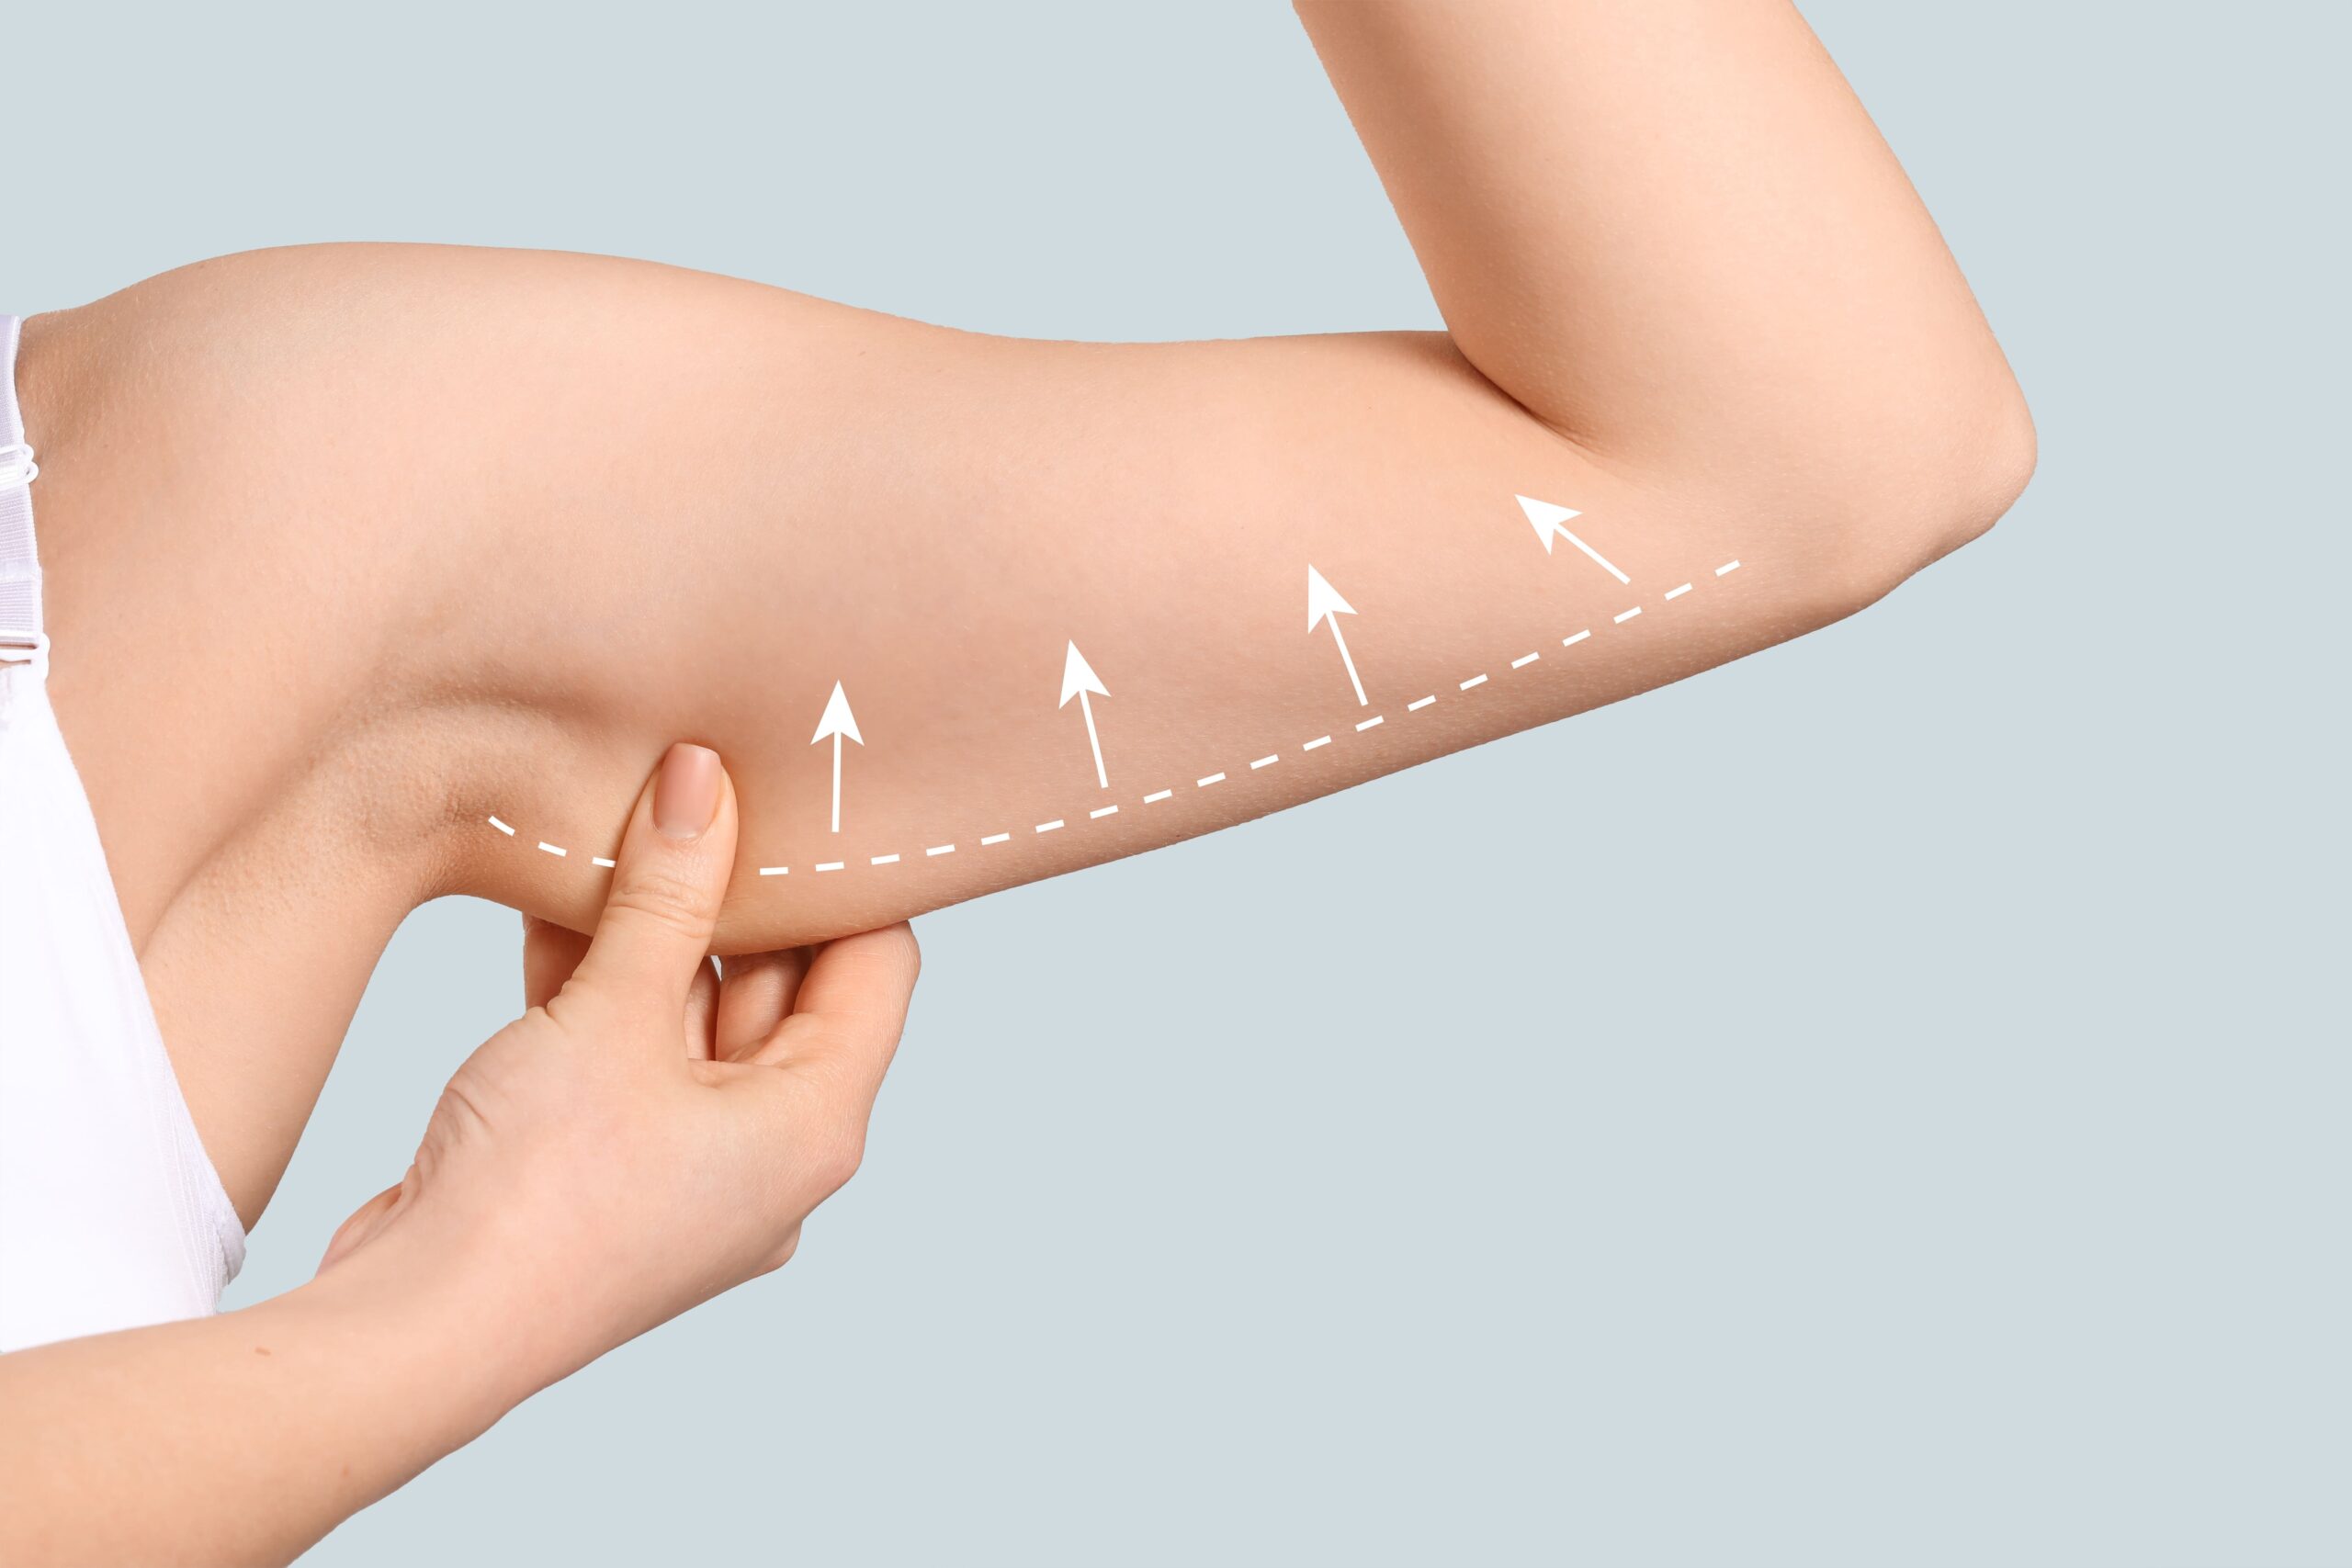 Q1. 手臂抽脂 後會有不適感嗎？過程中可能會有輕微不適，但通常可以透過醫師開的藥物緩解。Q2. 恢復期需要多久？ 恢復期因人而異，一般需要數週至數月。Q3. 是否會有疤痕？抽脂過程中使用微小切口，疤痕通常相當隱痕